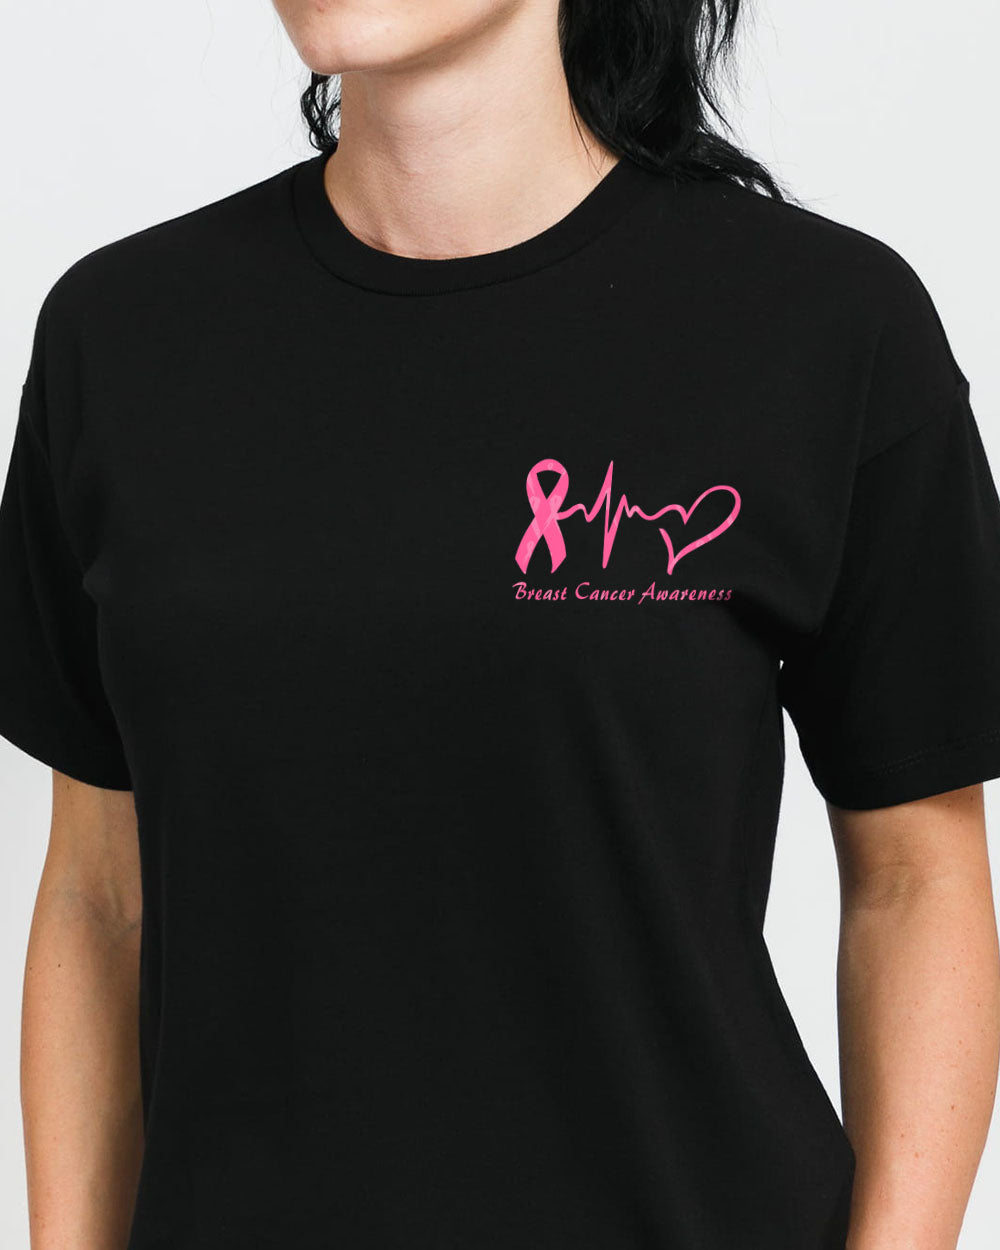 Hope Wings Women's Breast Cancer Awareness Tshirt